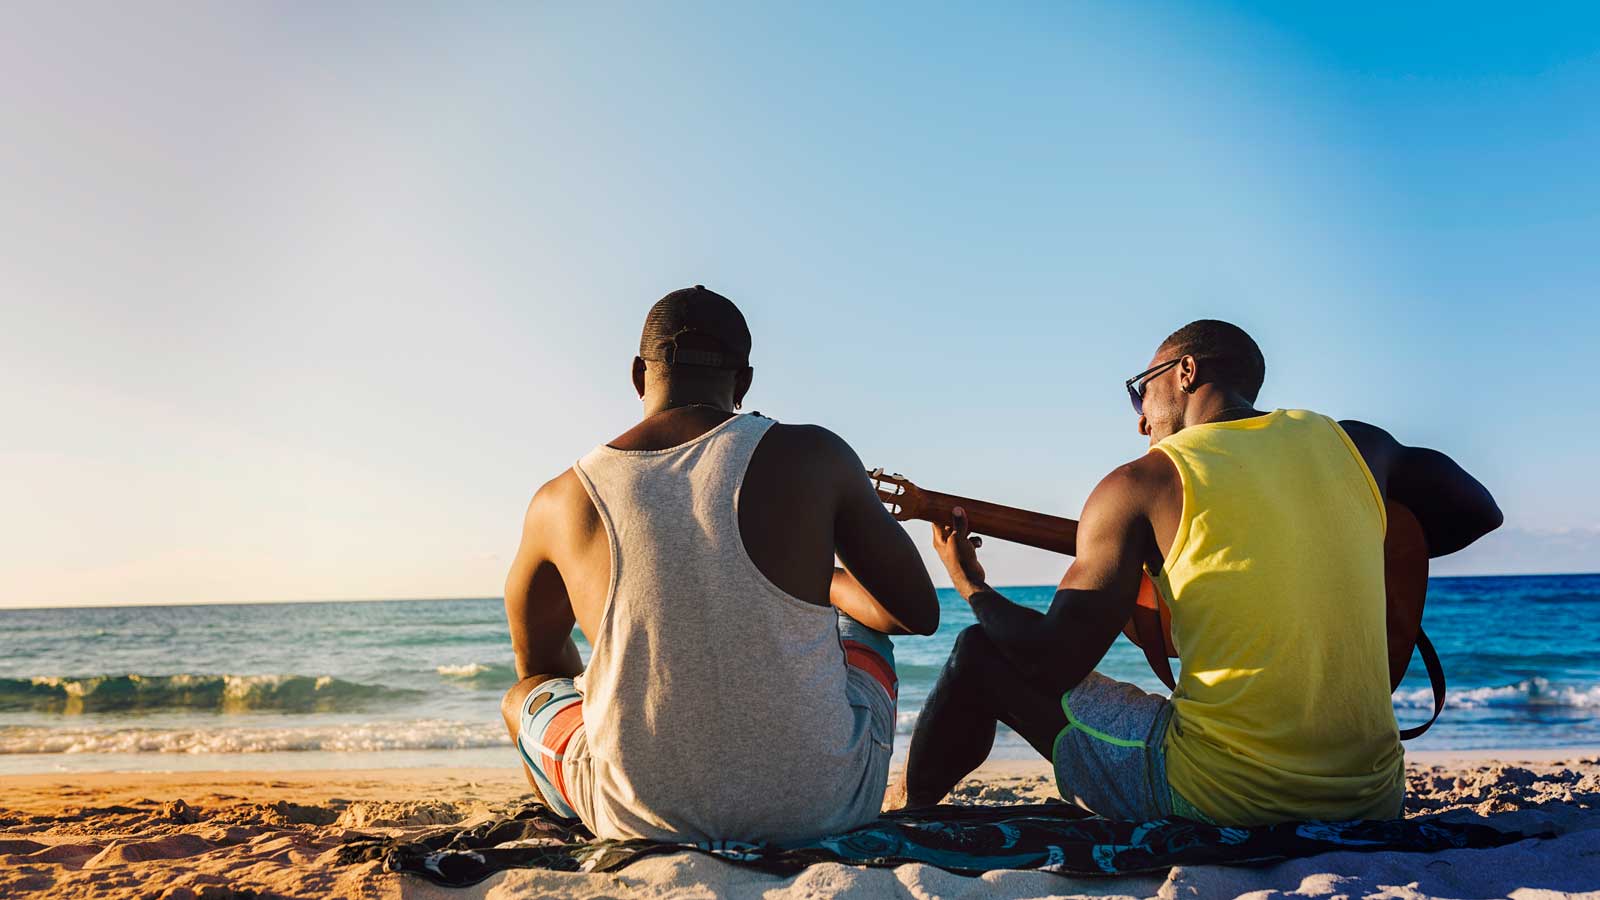 men's beach addiction treatment center ‌ ‌rehab for detox